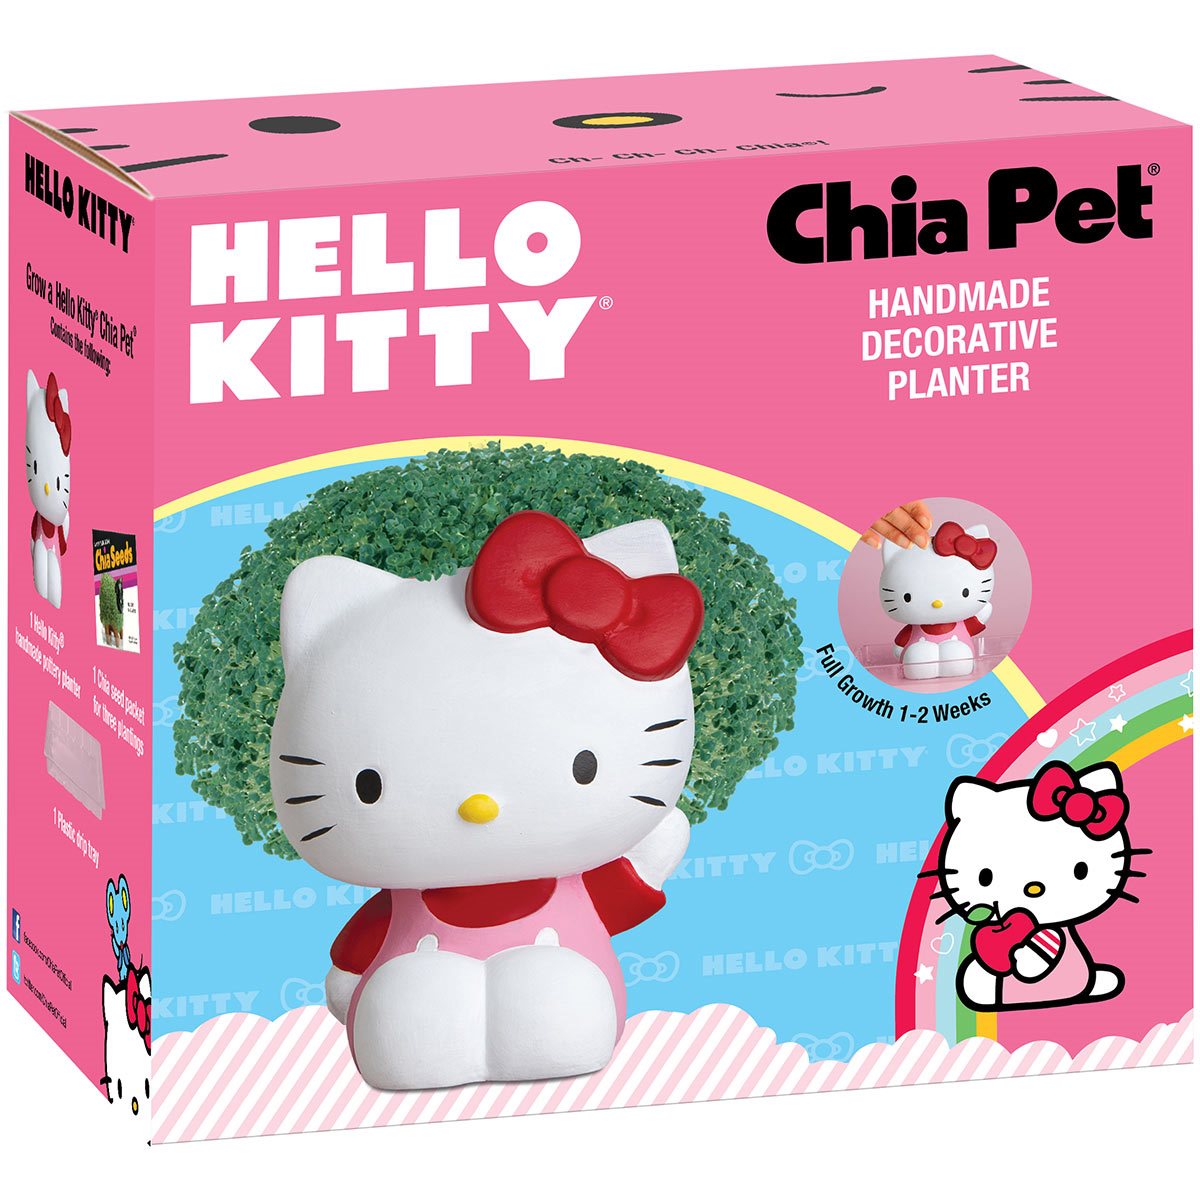 Chia Pet Planter - Star Wars The Child Cat Grass